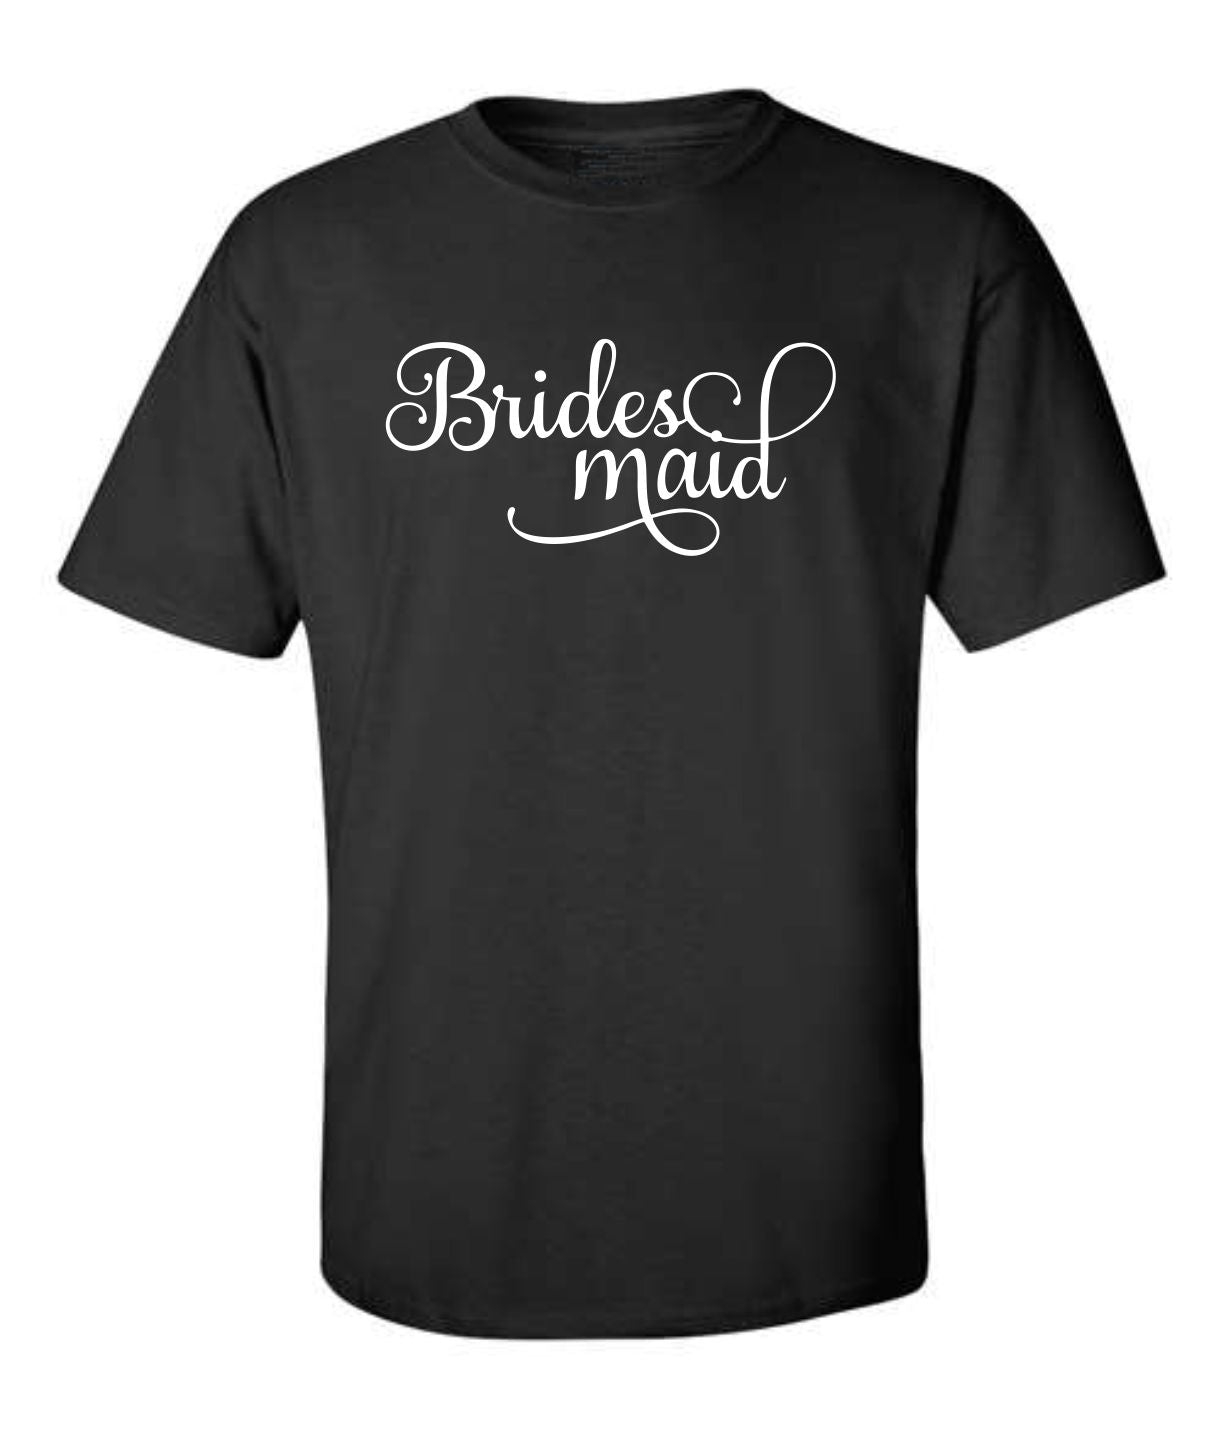 "Bridesmaid" (Swirl Design) T-Shirt